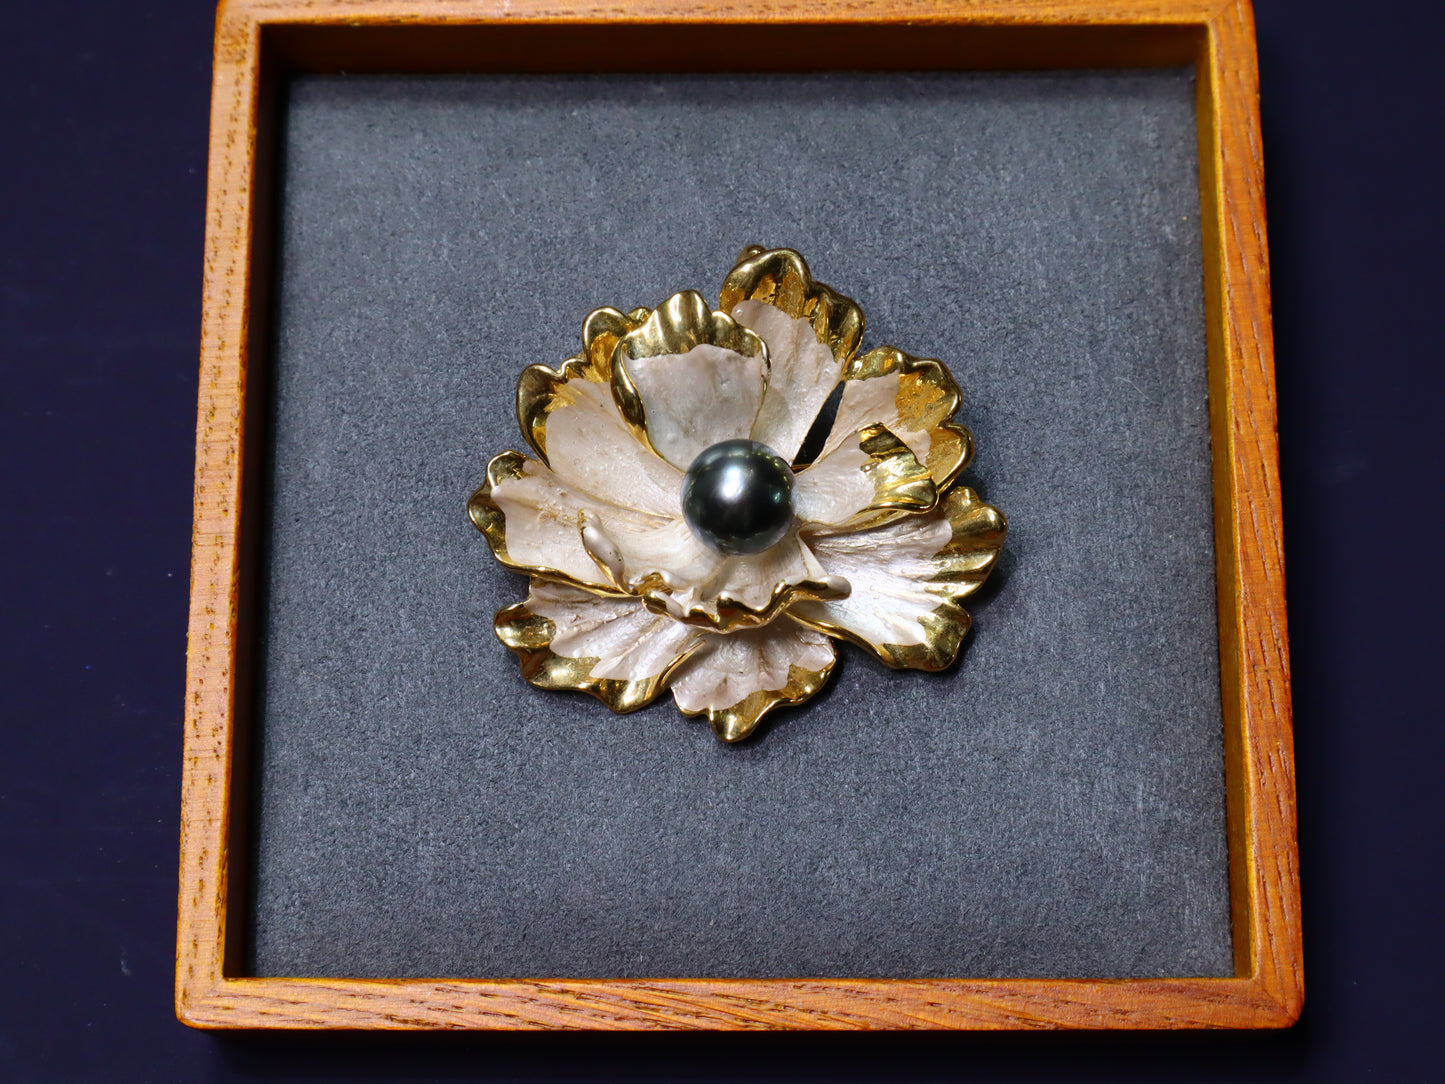 10-11mm Black Tahitian Pearl Brooch